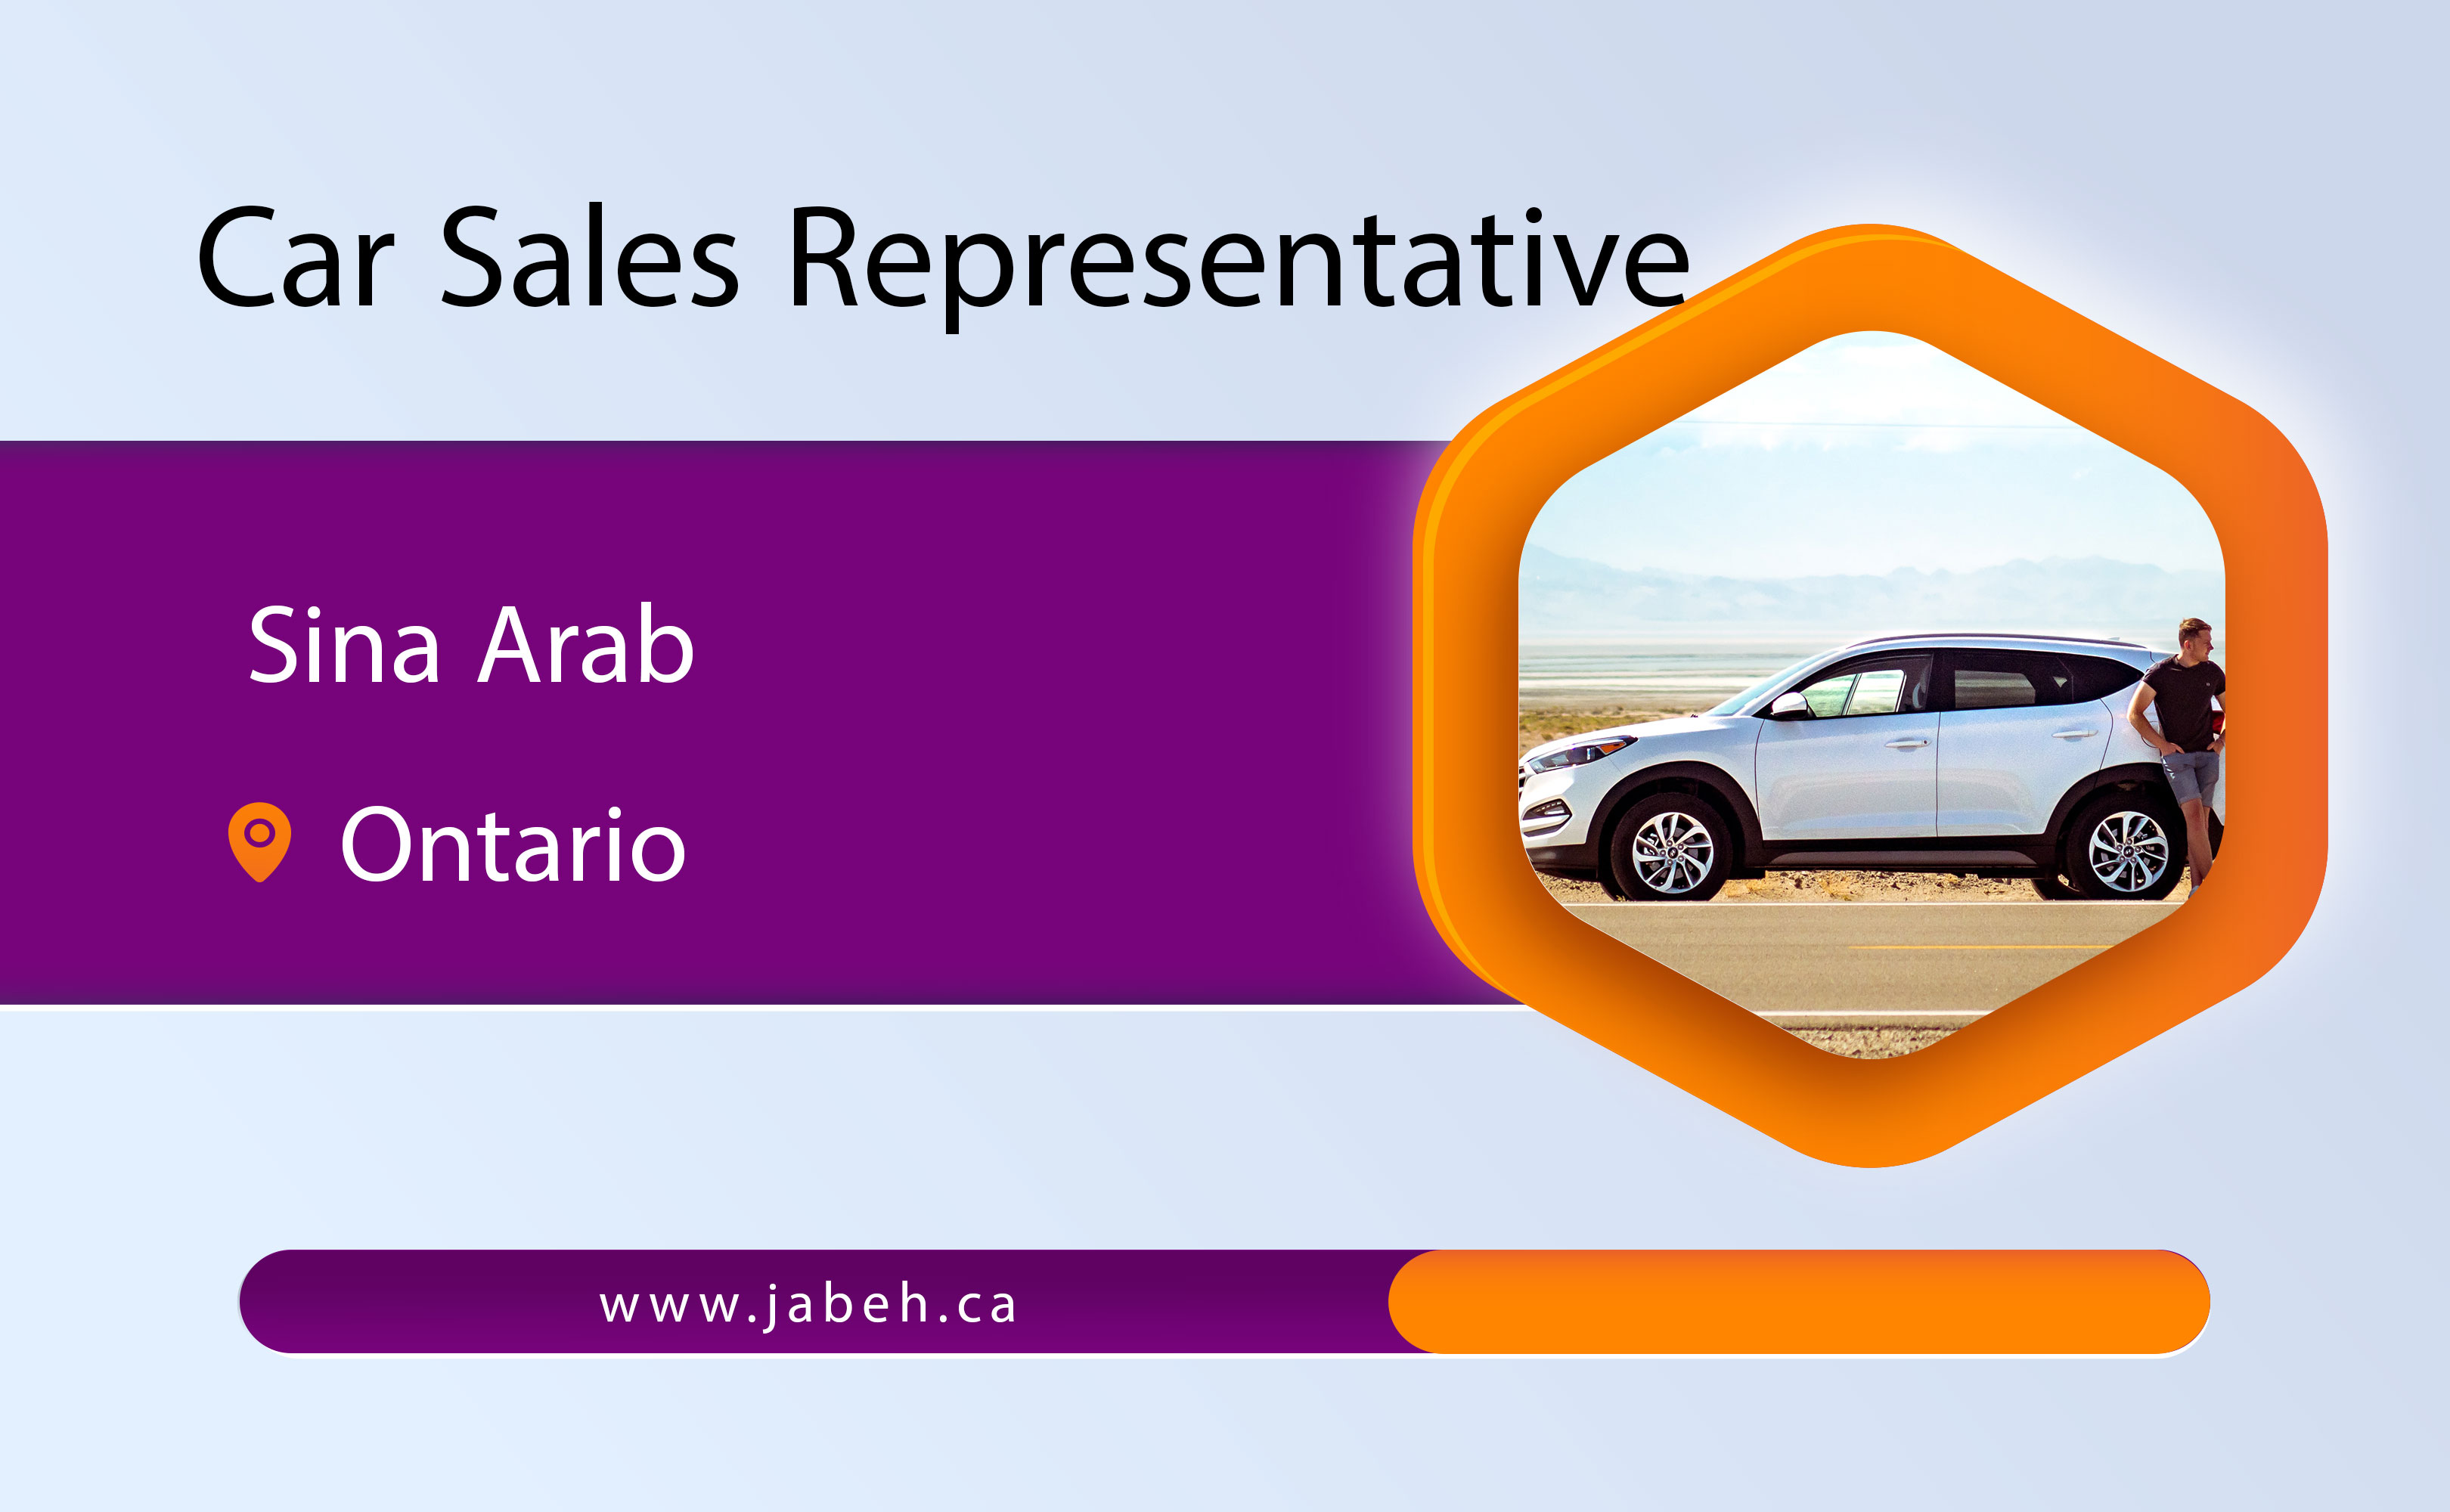 Iranian sales representative of Sina Arab cars in Ontario